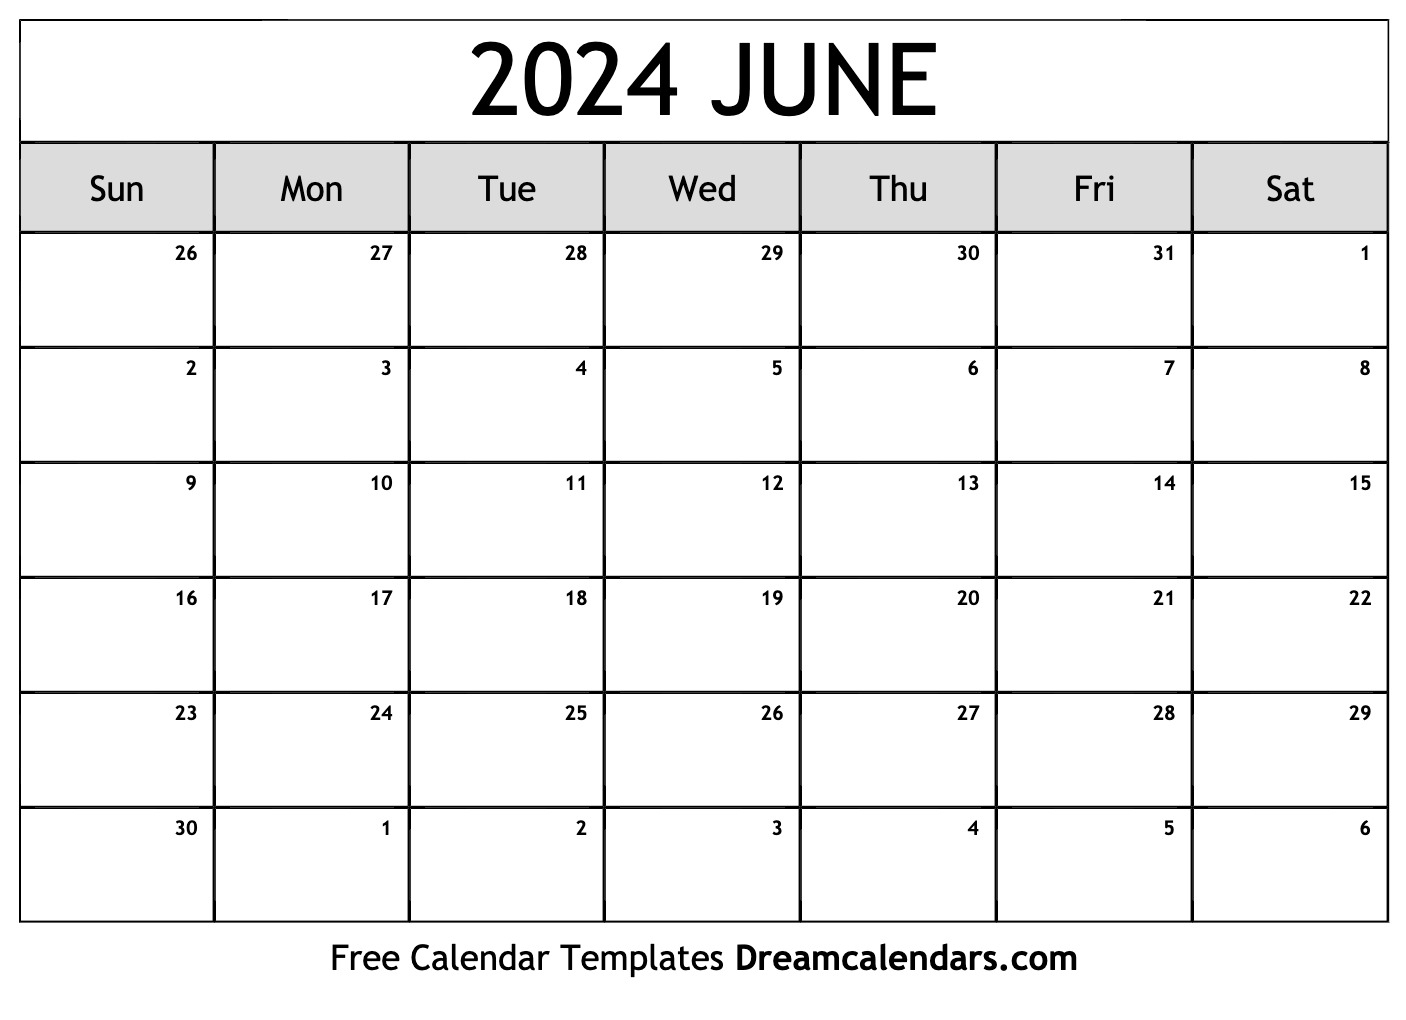 June 2024 Calendar | Free Blank Printable With Holidays for Free Printable June Calendar 2024 With Holidays